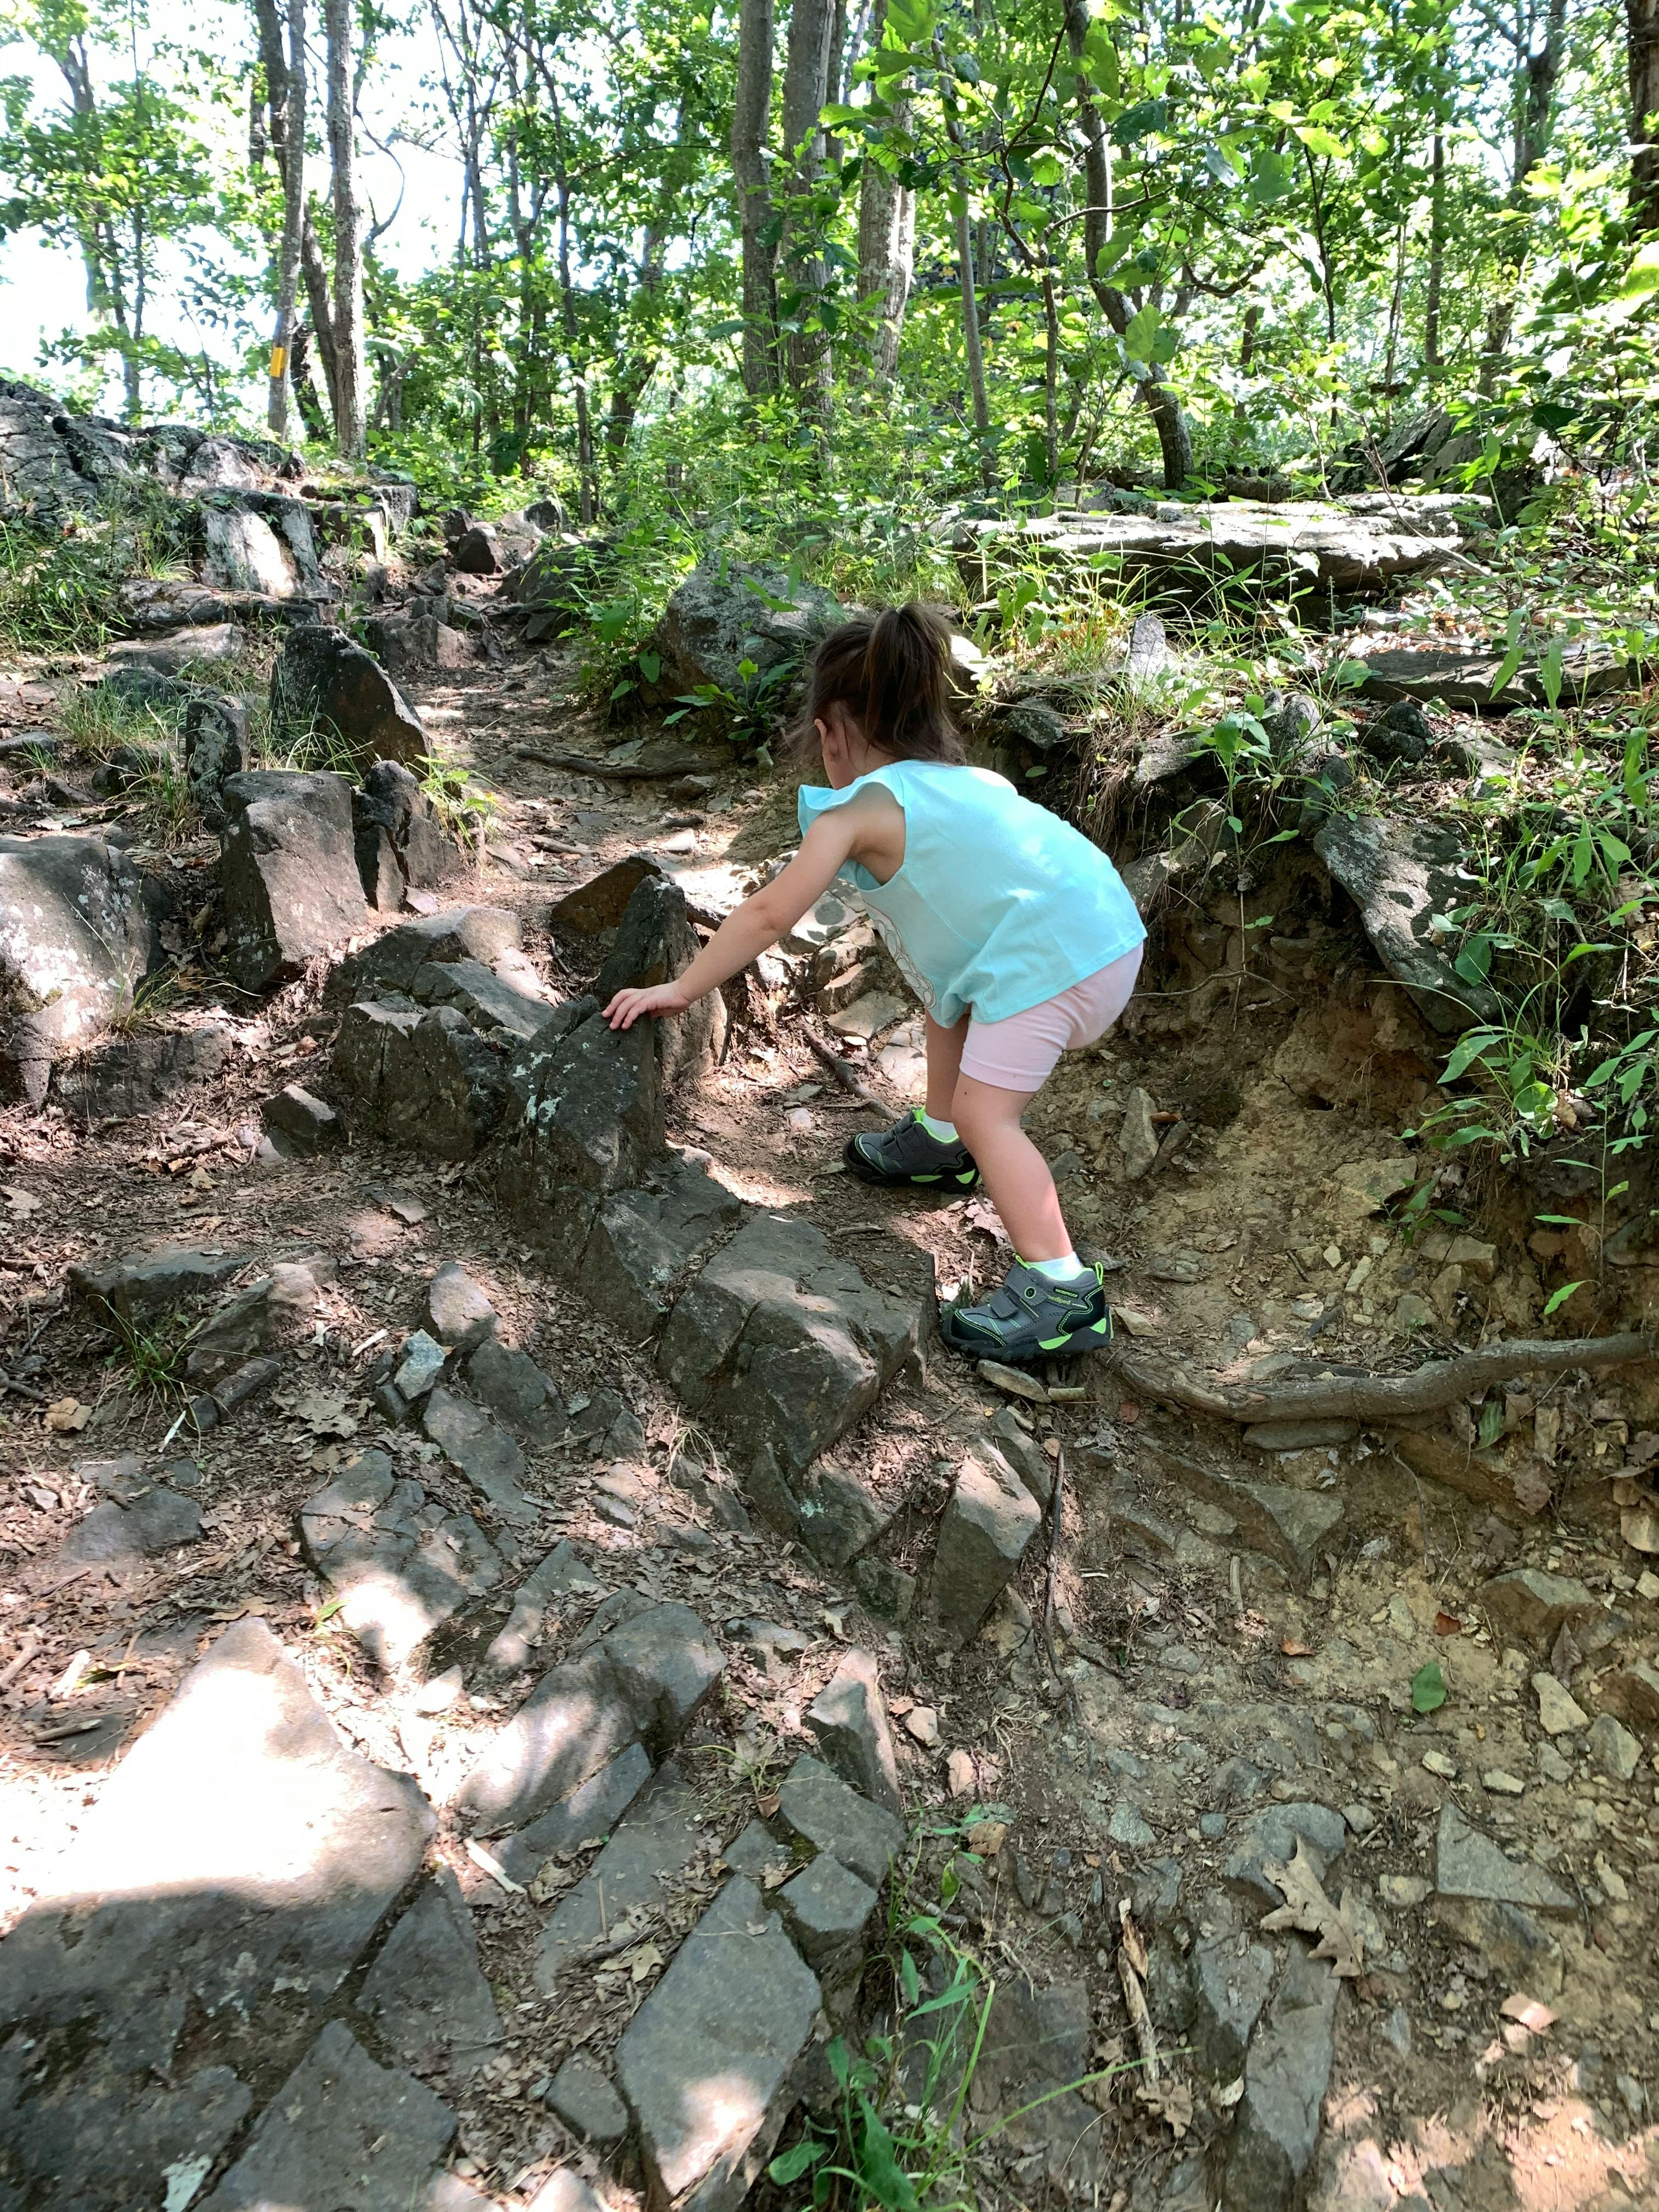 A little girl clambers up rocks